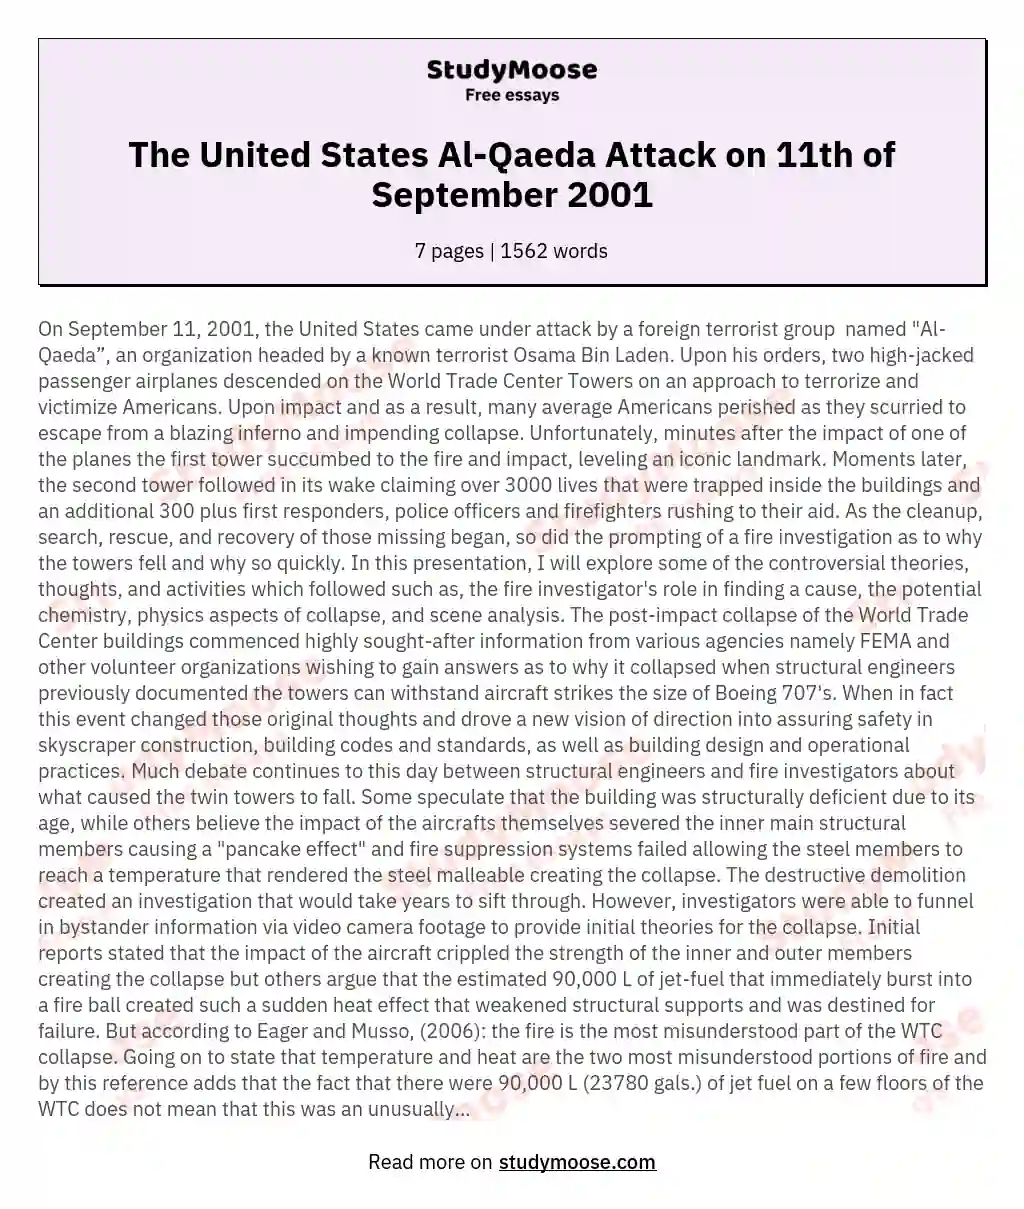 The United States Al-Qaeda Attack on 11th of September 2001 essay